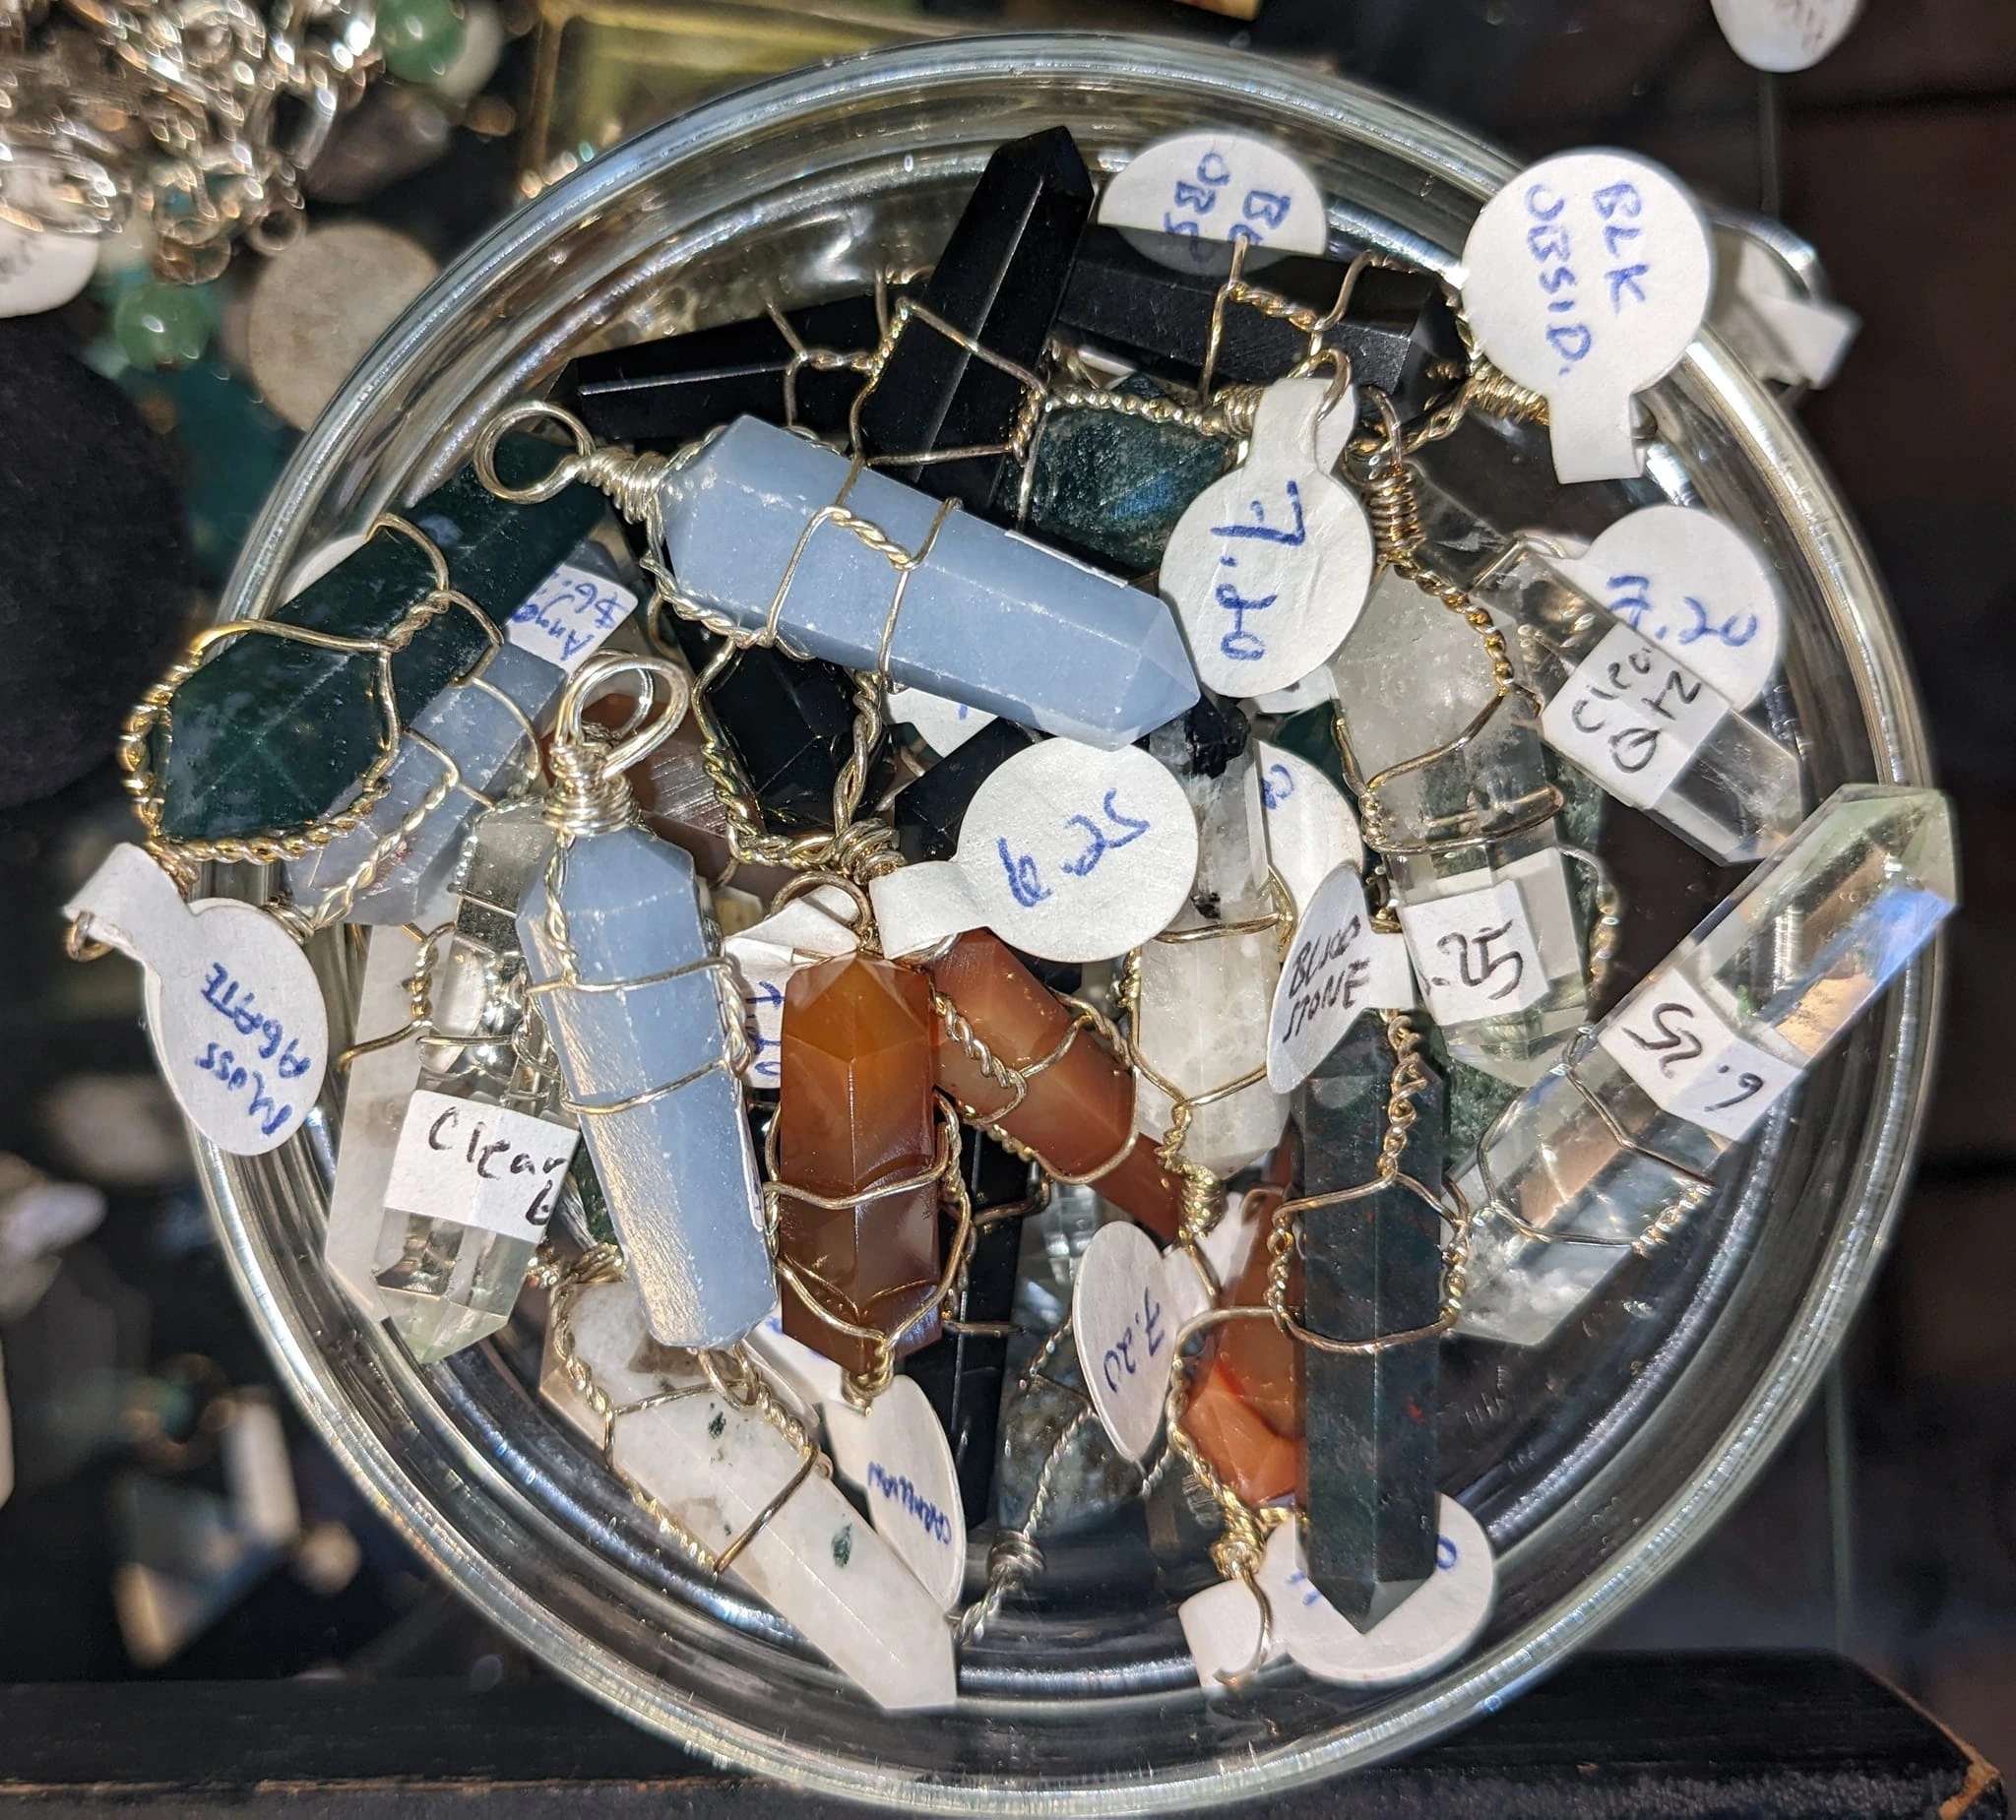 A display of crystal pendant charms